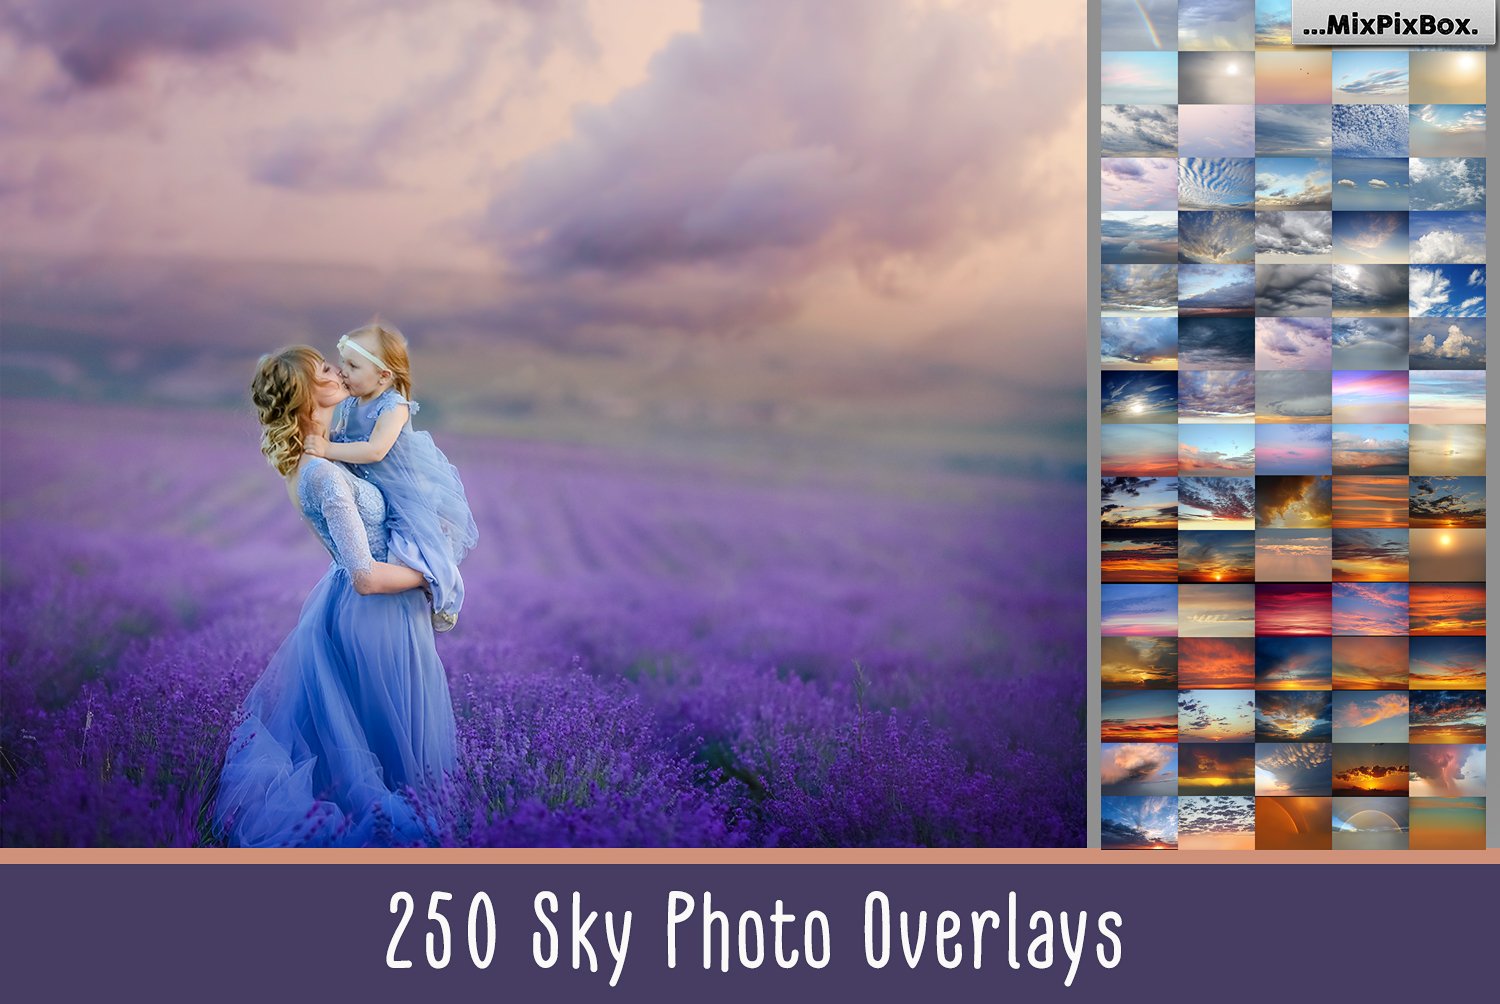 250 Sky Photo Overlayscover image.